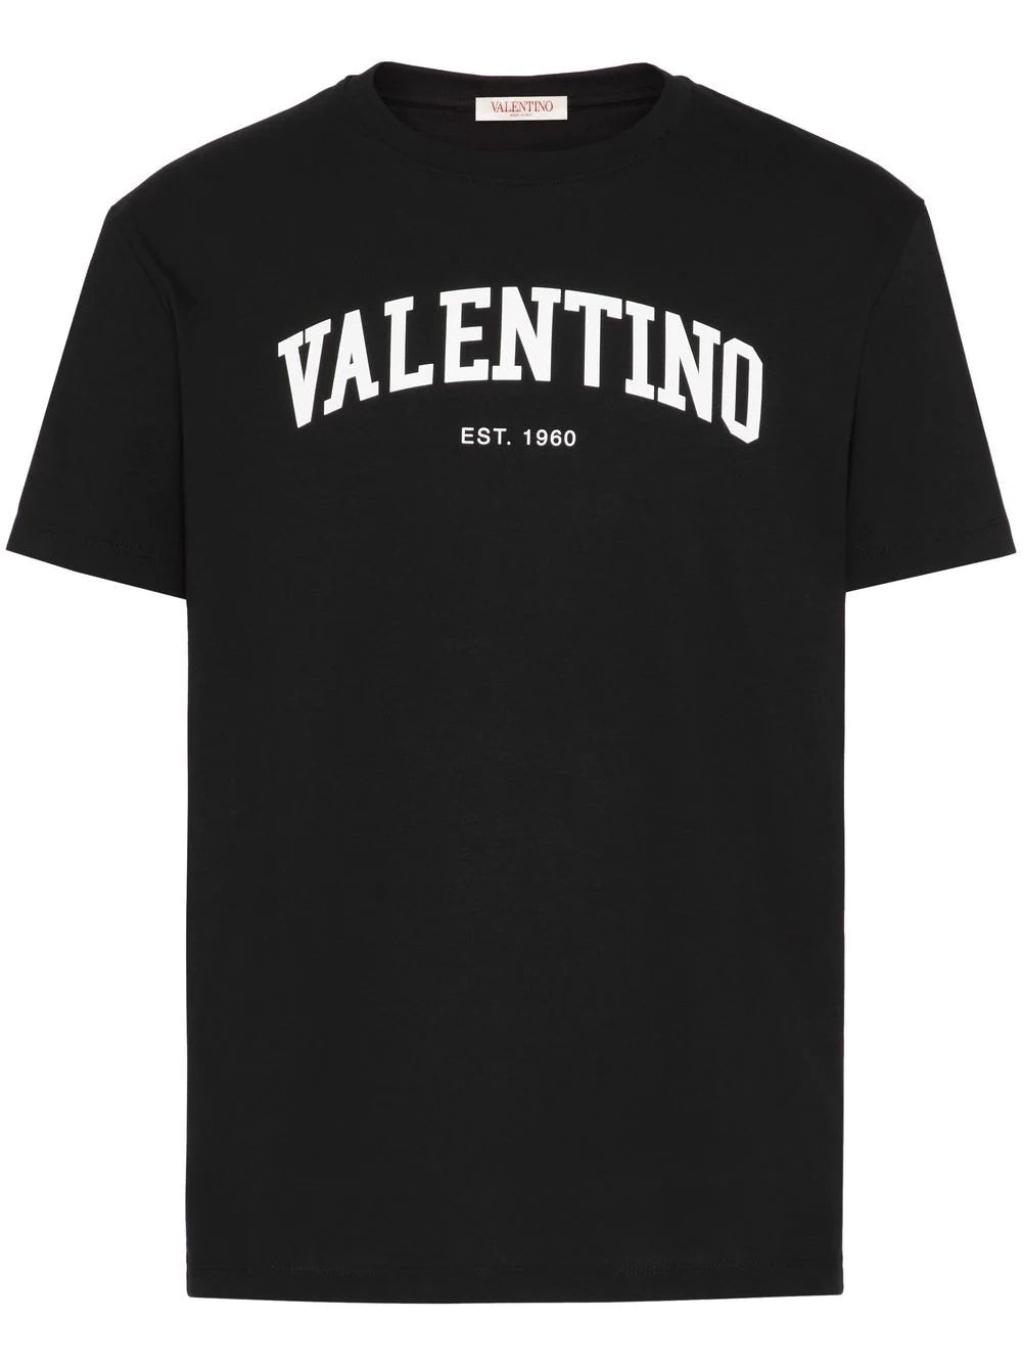 valentino logo black tricko 3 (1)